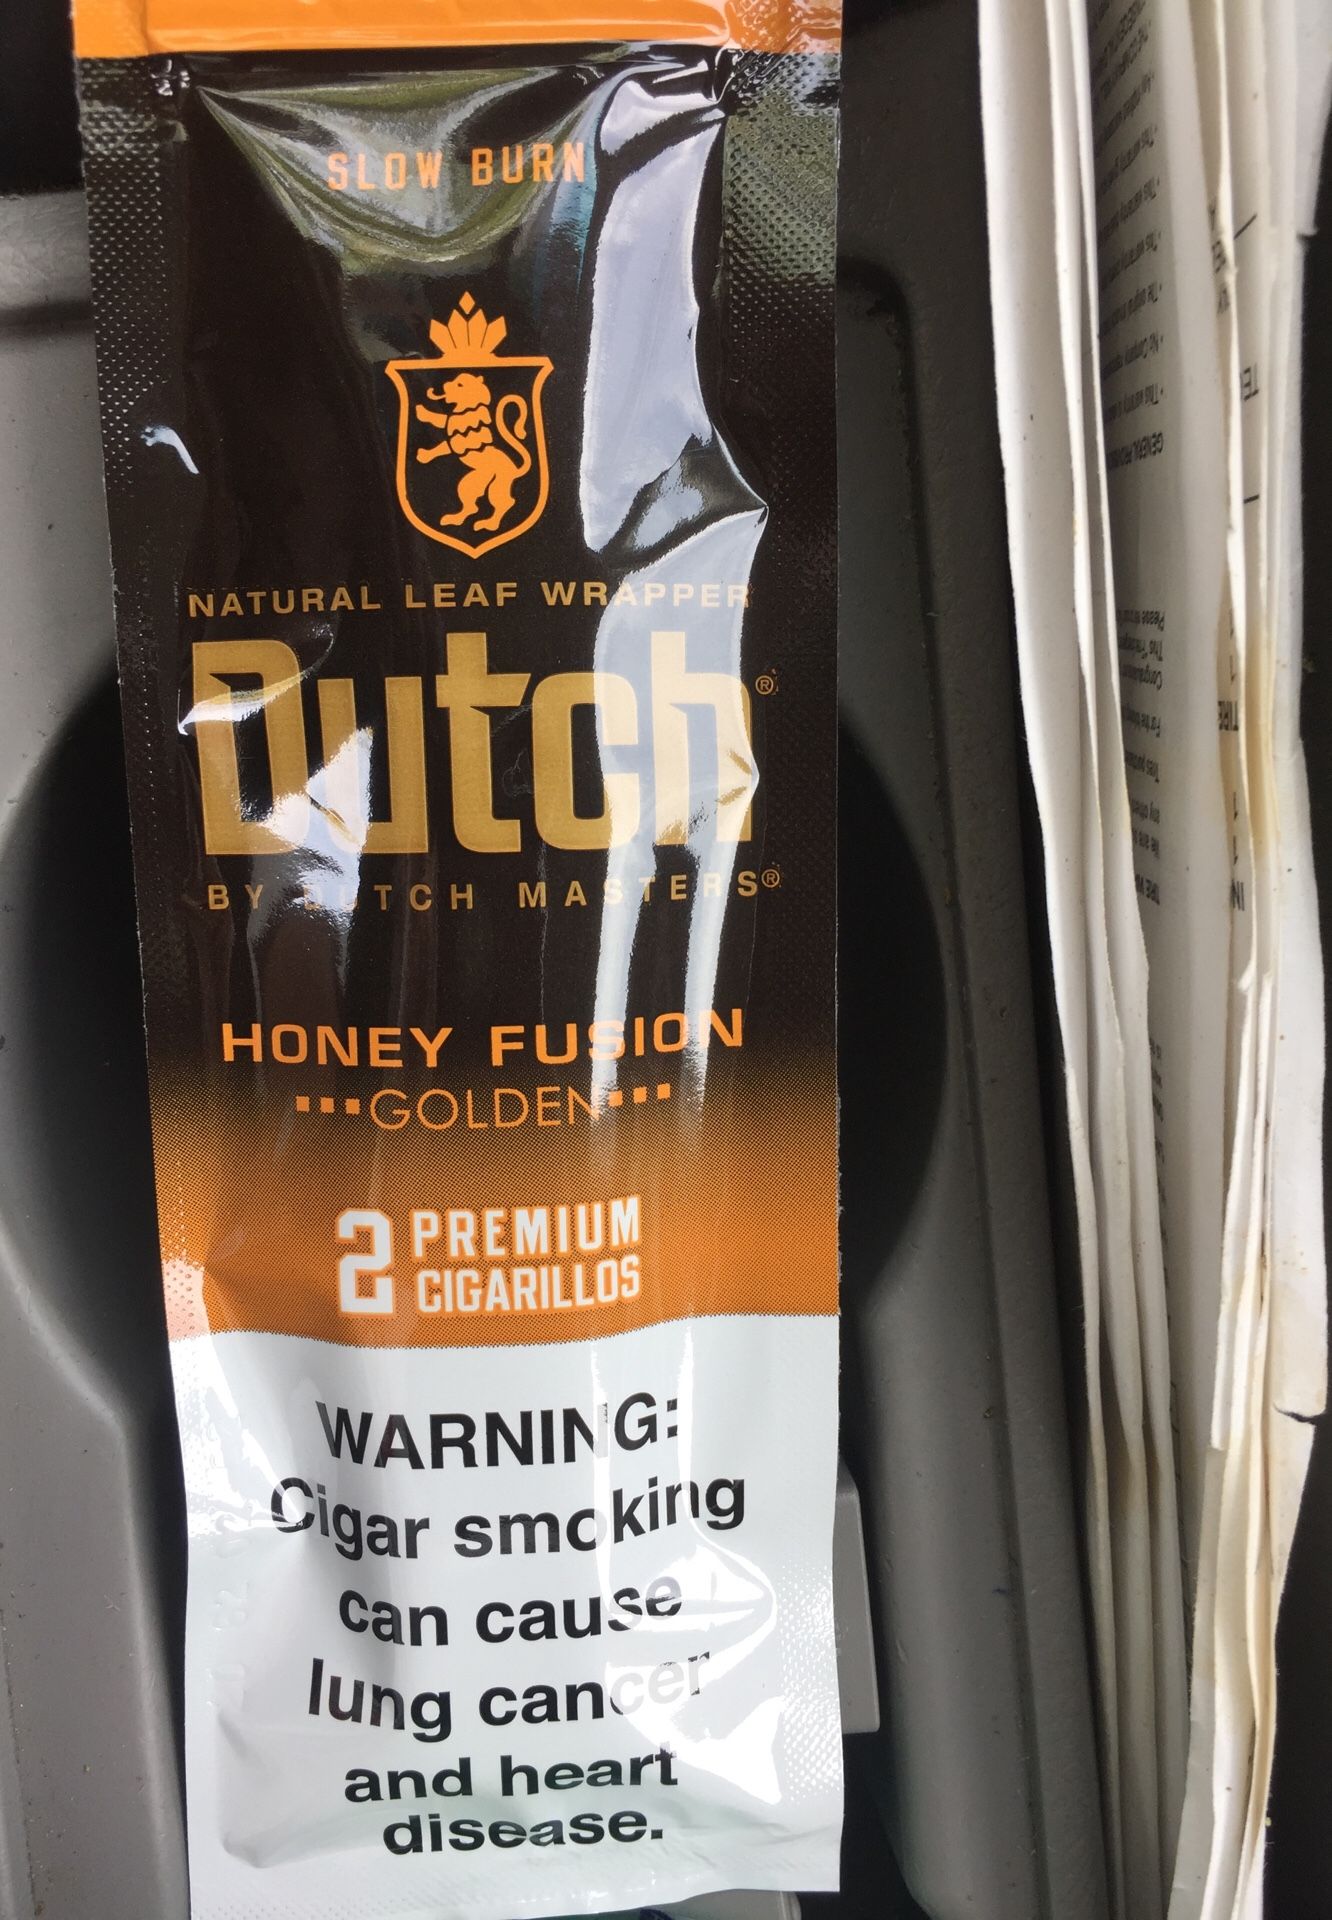 Honey Fusion Dutches